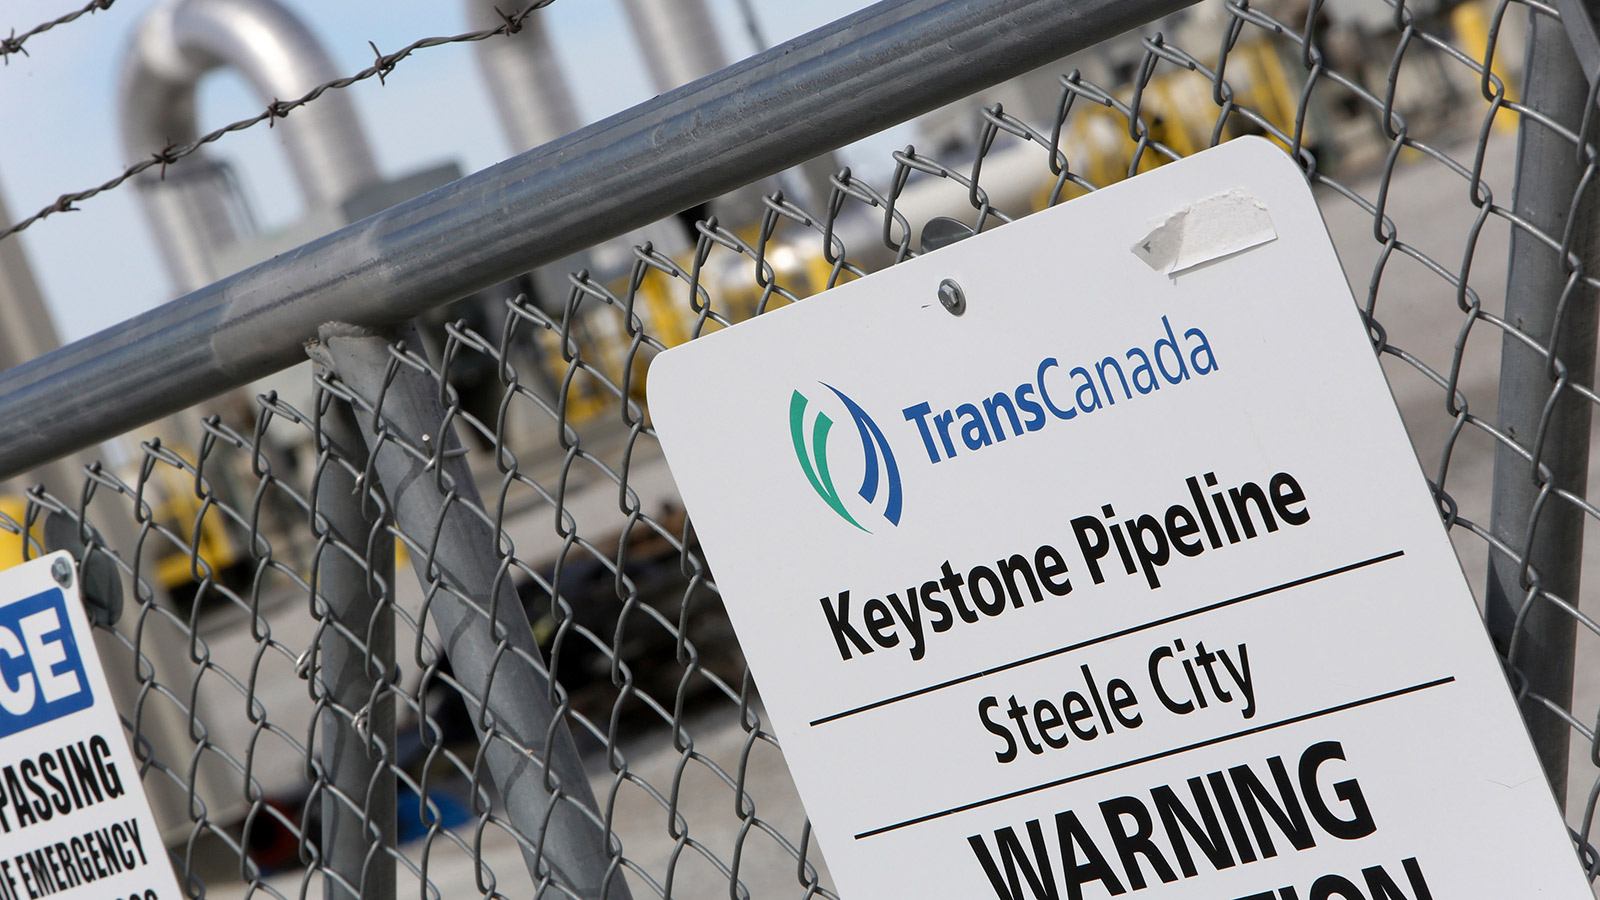 A Keystone pipeline sign